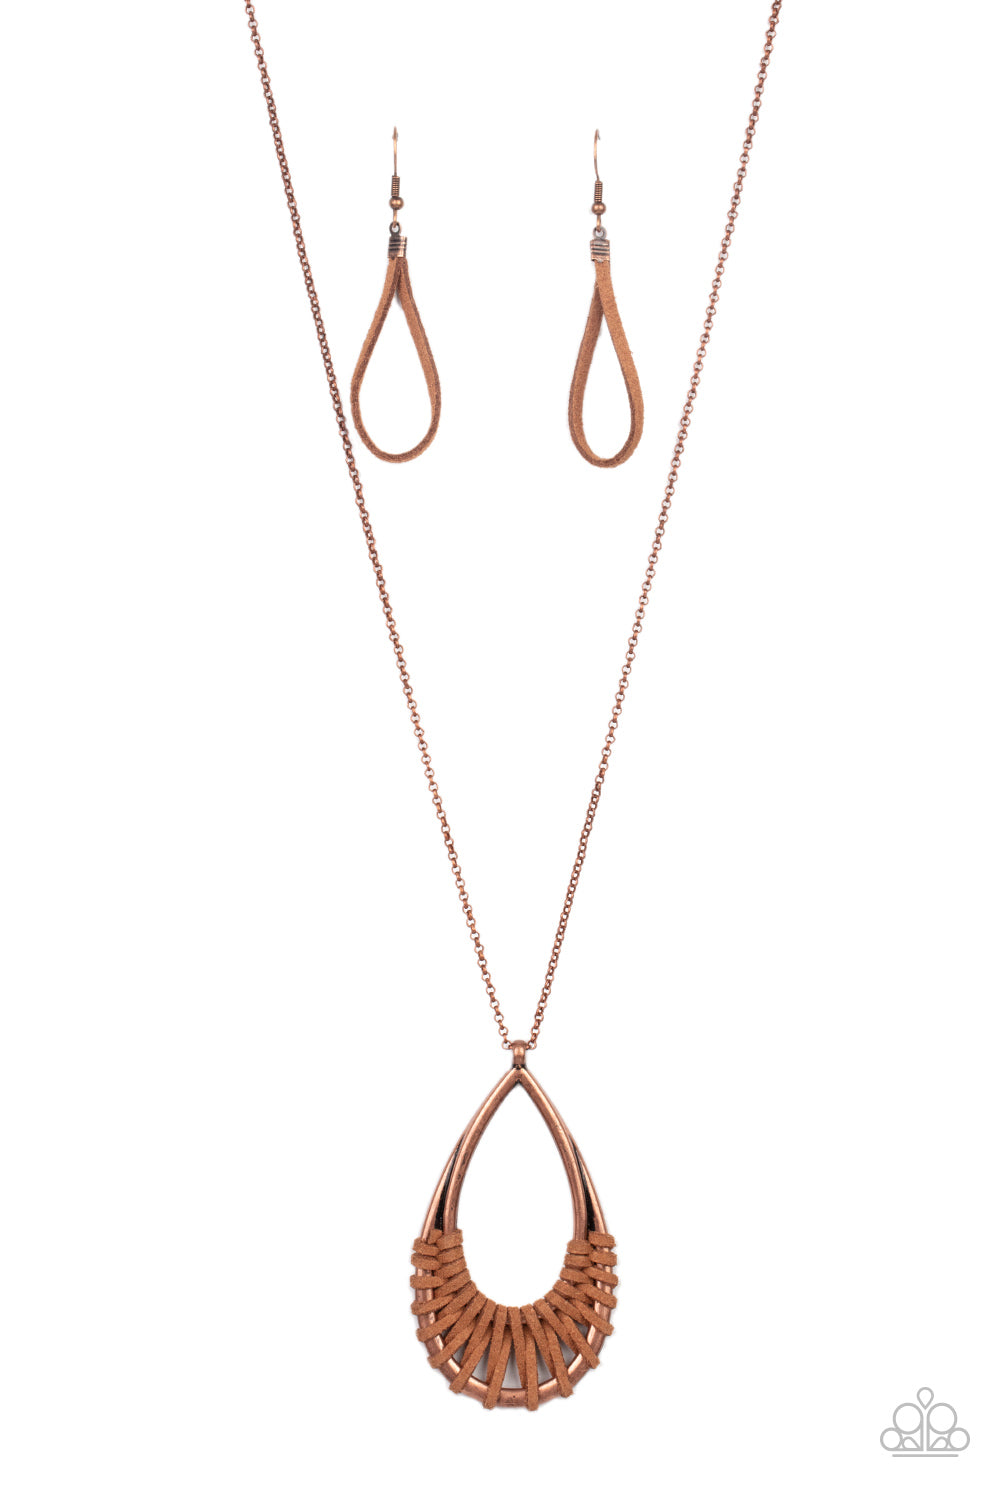 Paparazzi - Homespun Artifact - Copper Necklace